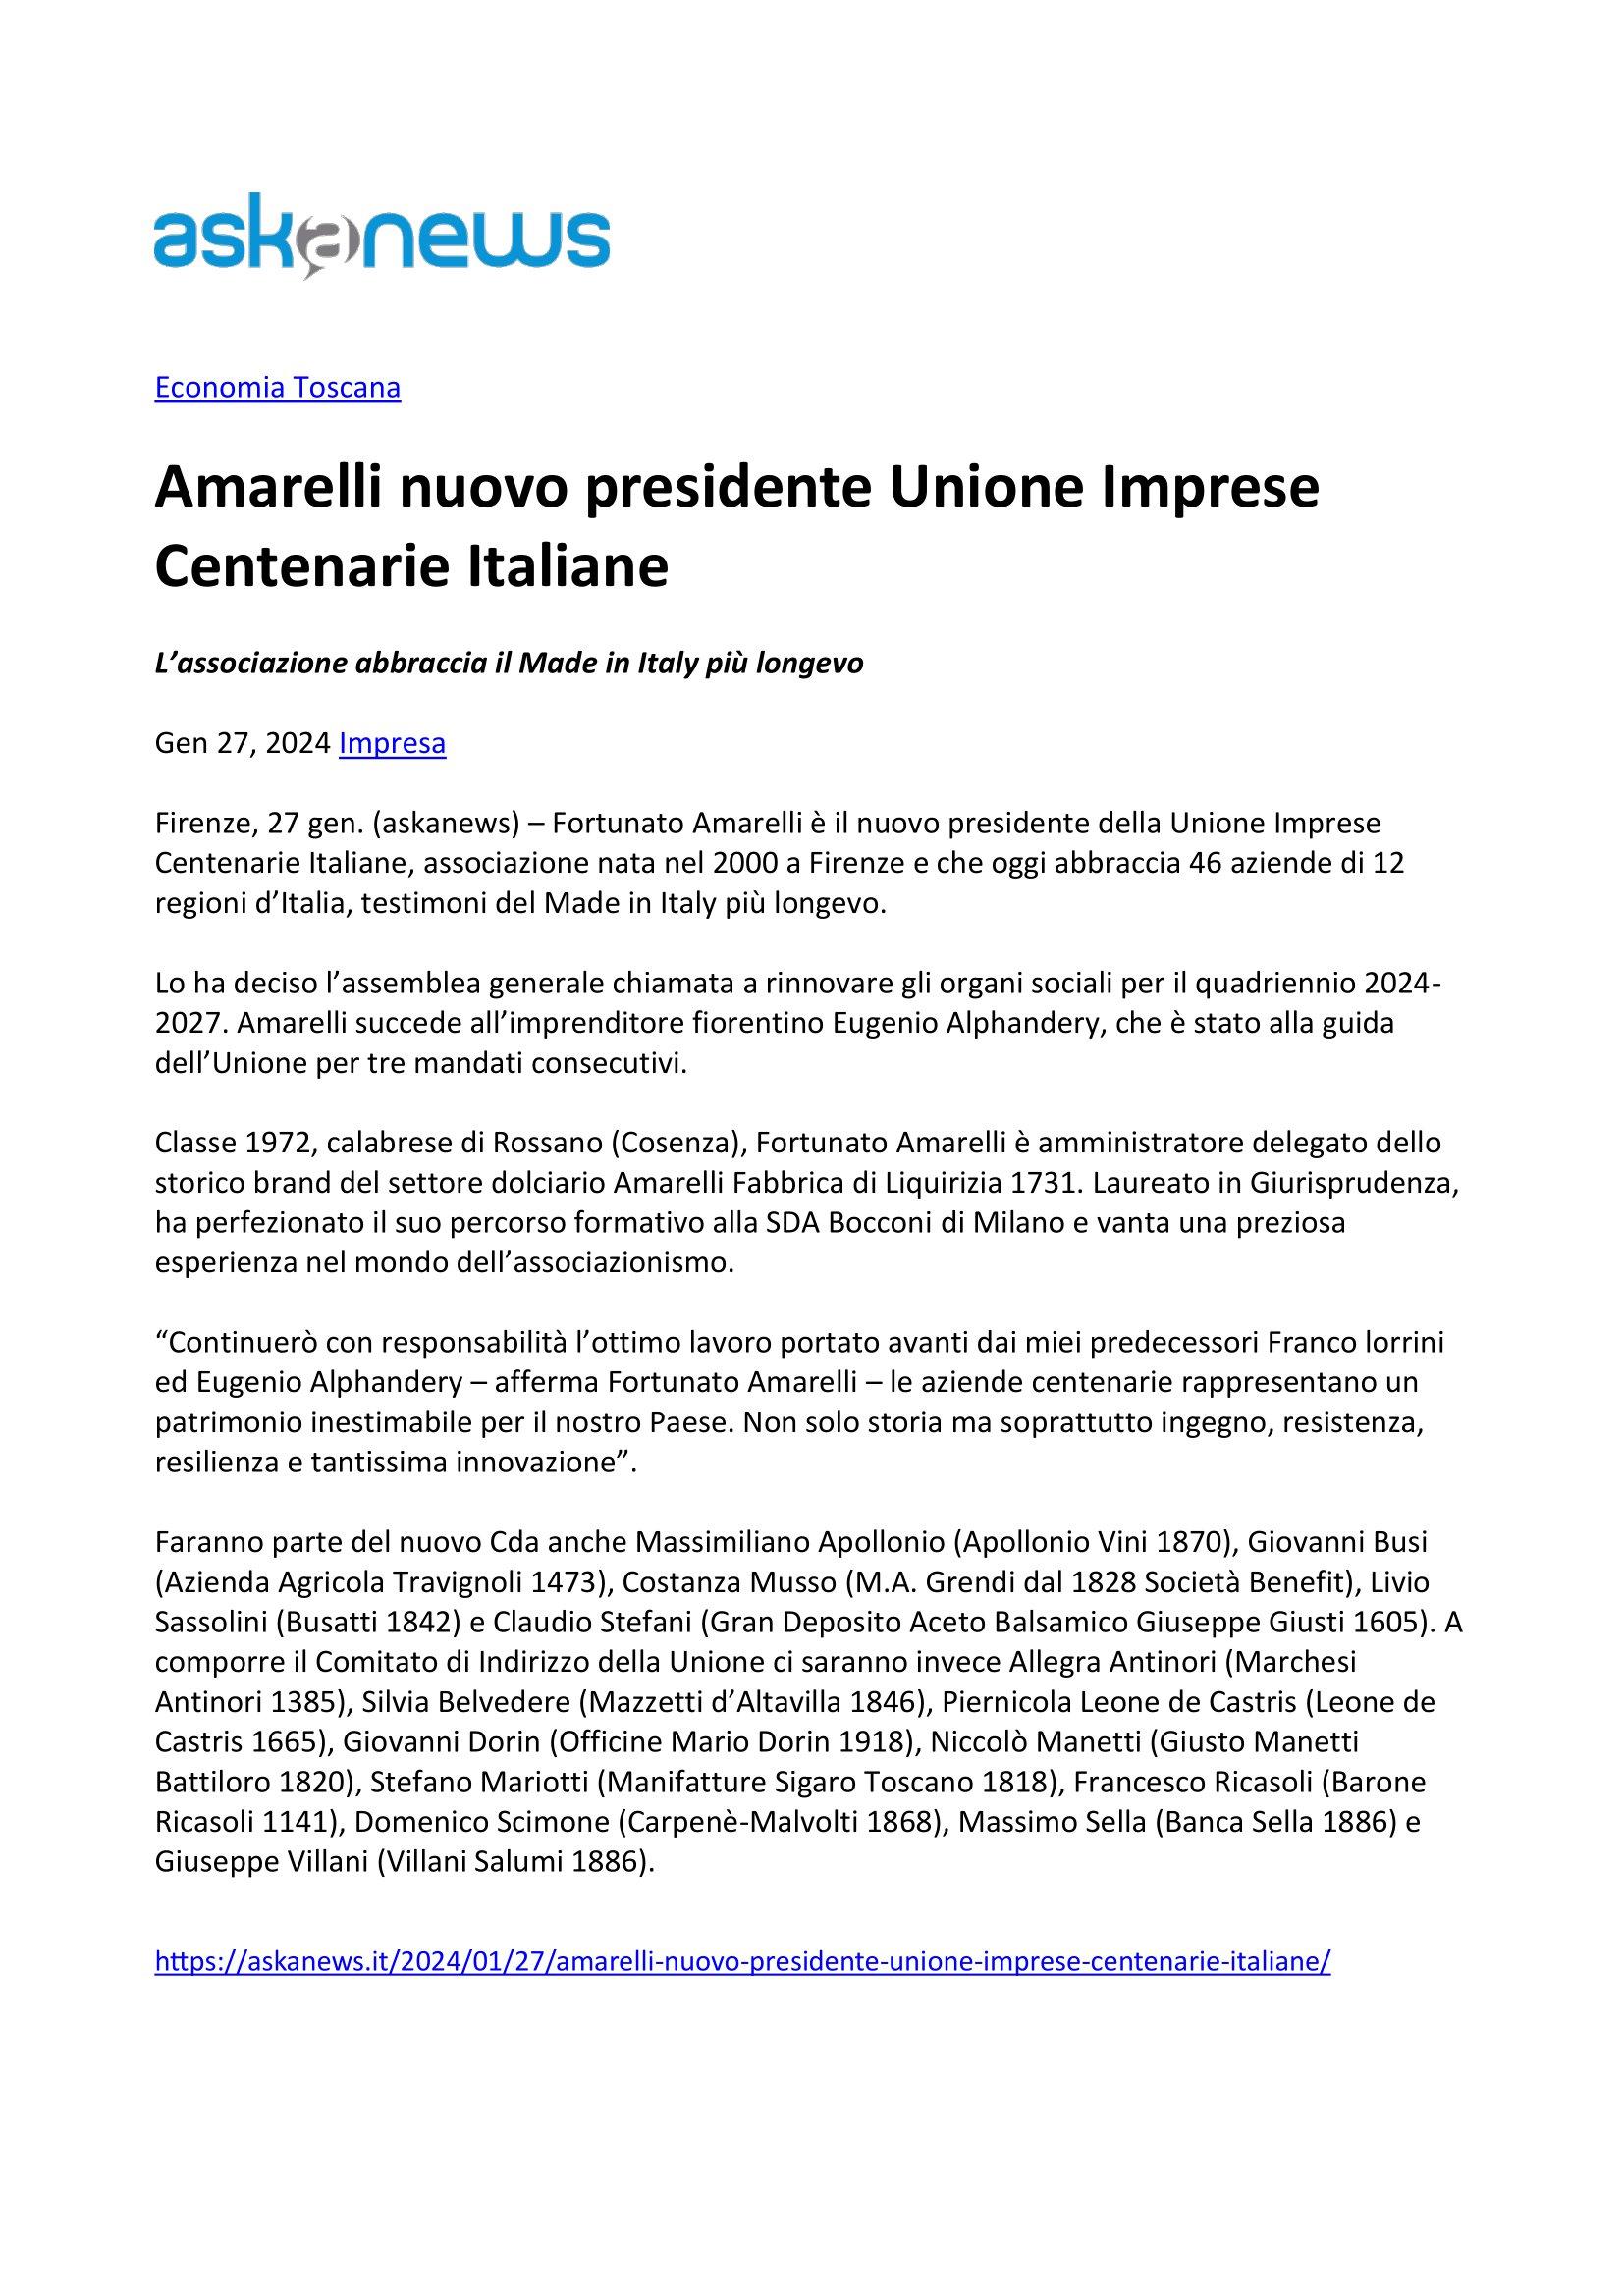 Askanews Amarelli nuovo presidente Unione Imprese Centenarie 27 gennaio 2024